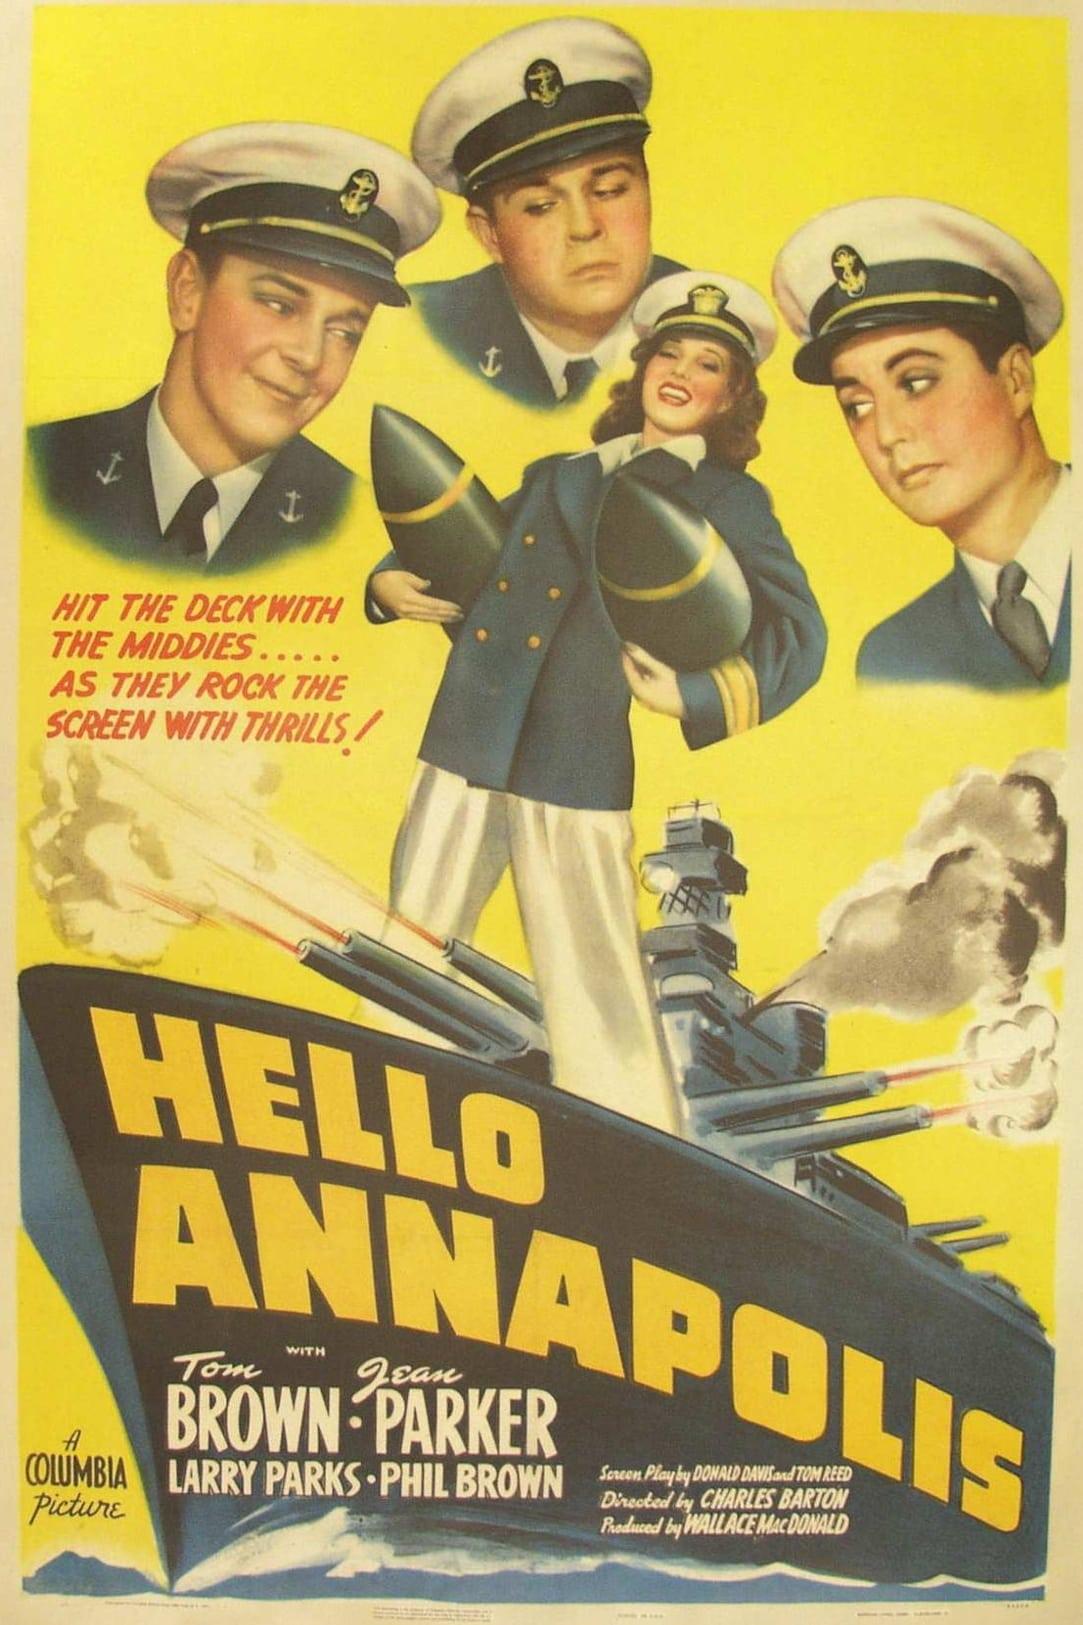 Hello, Annapolis poster